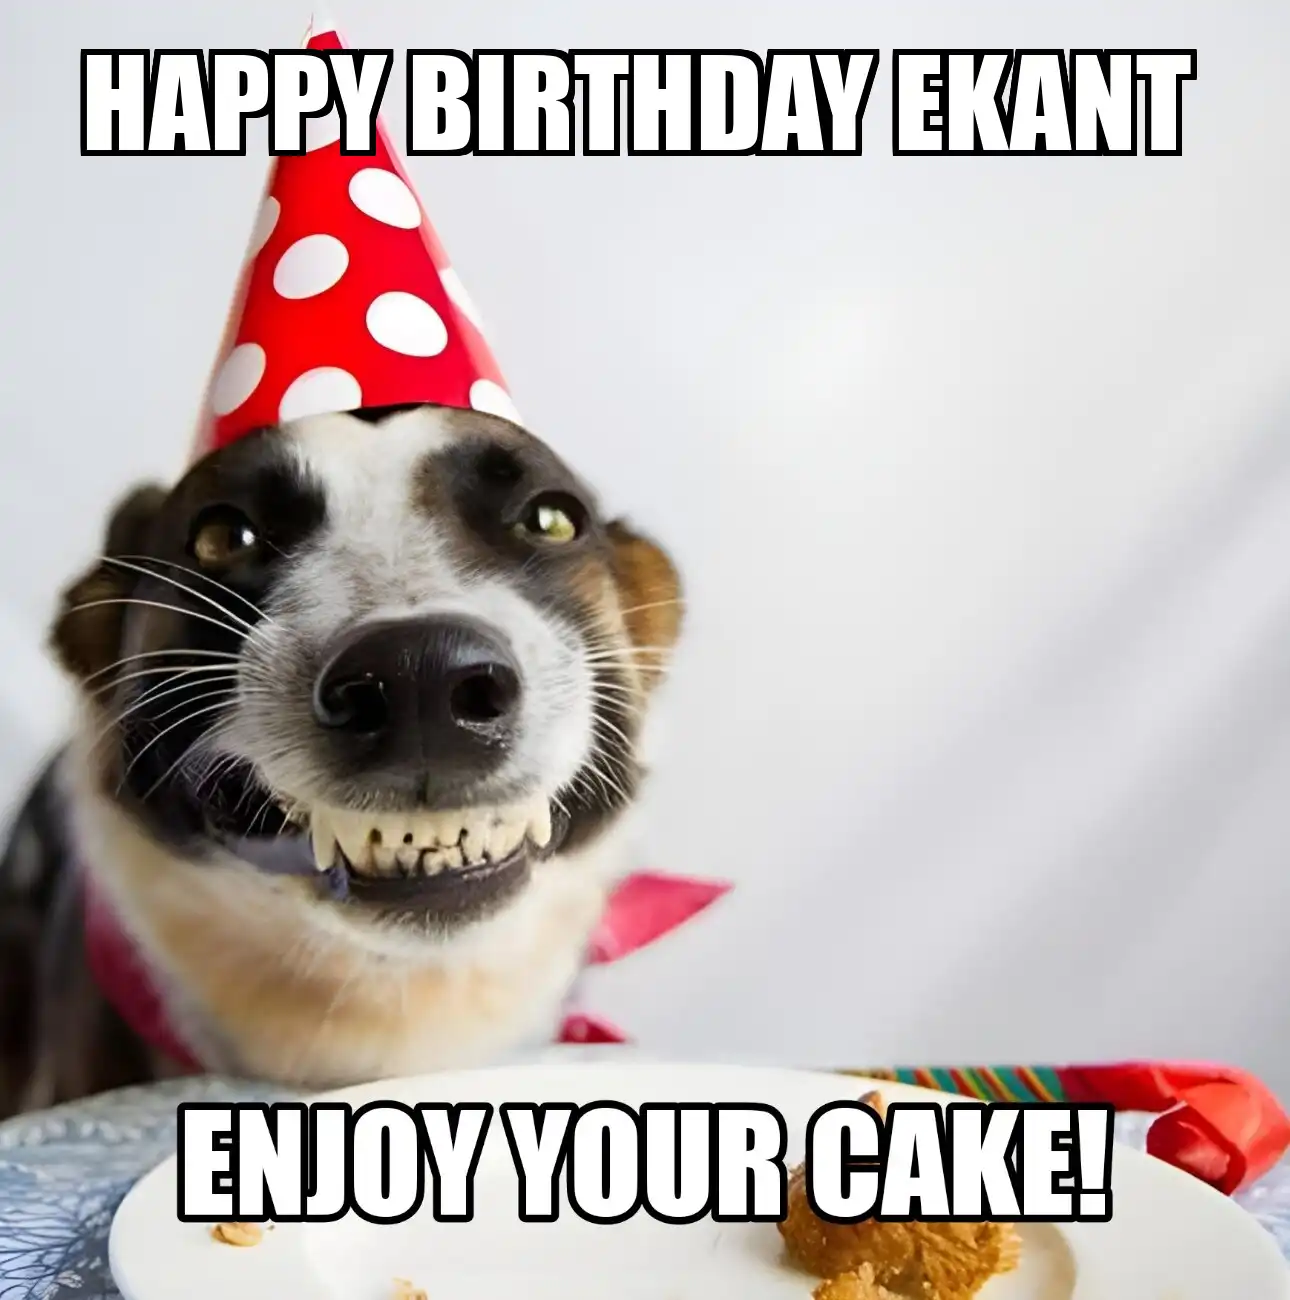 Happy Birthday Ekant Enjoy Your Cake Dog Meme